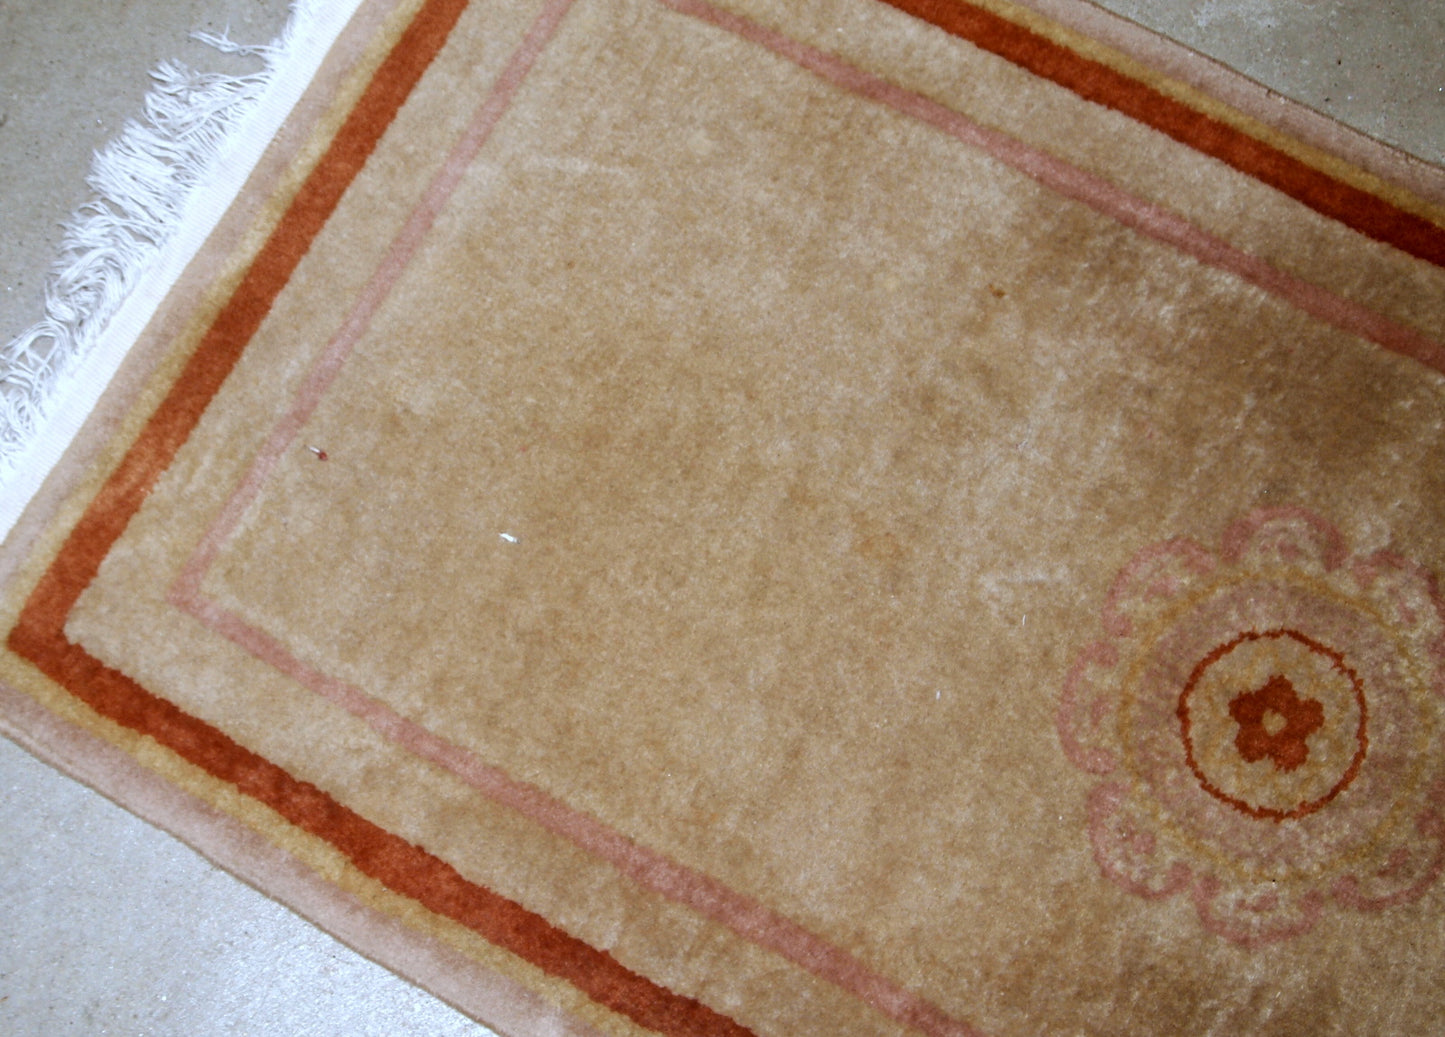 Handmade vintage Chinese rug 1970s